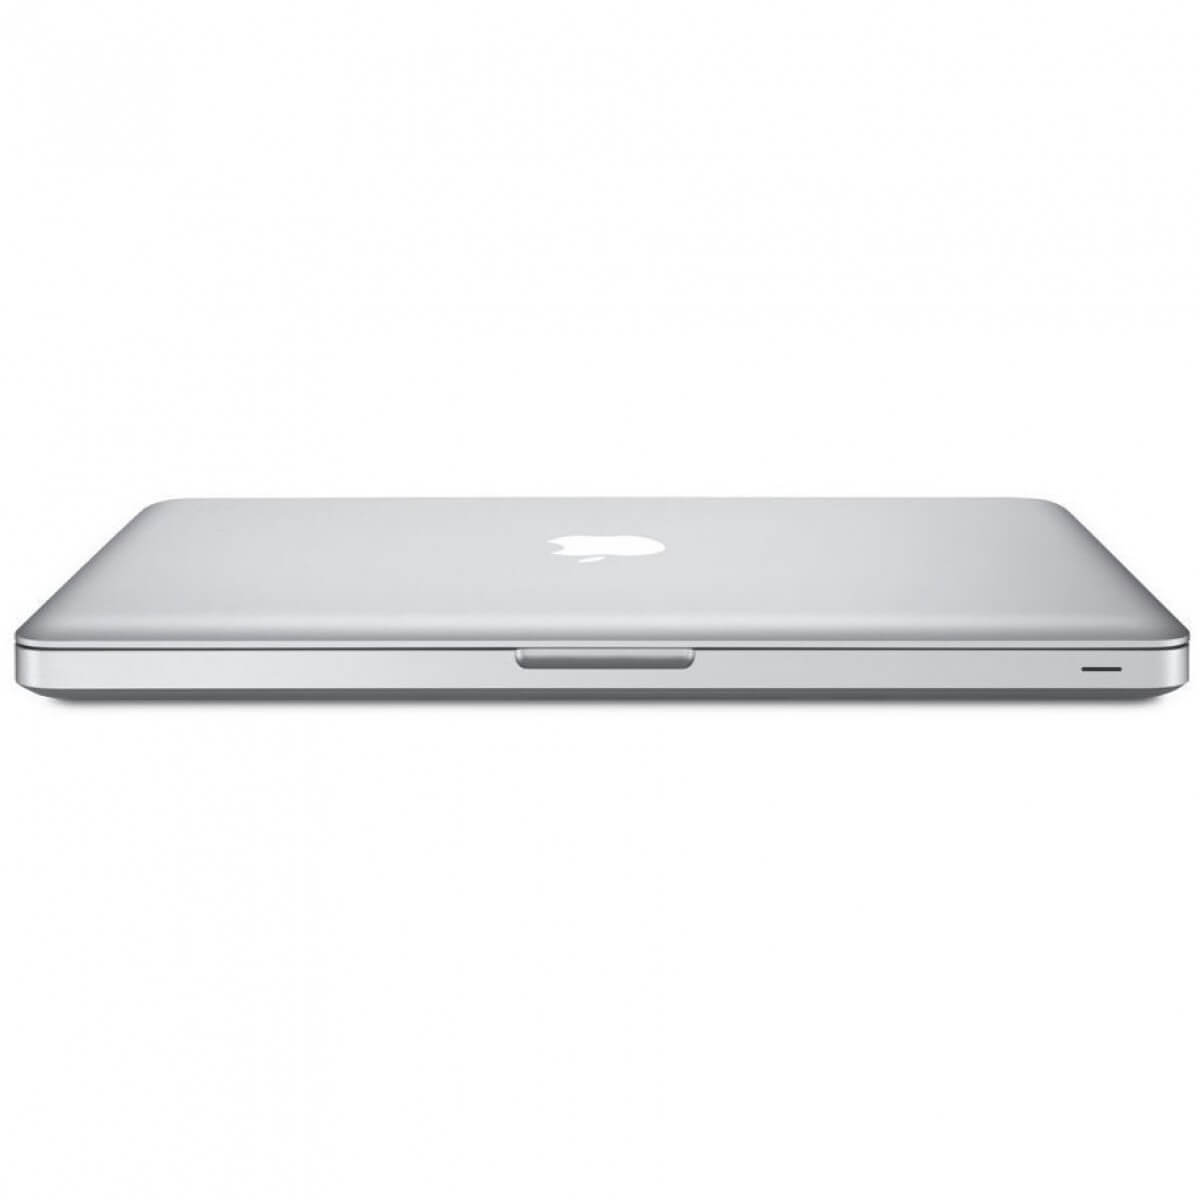 Restored Apple MacBook Pro Laptop, 13.3", Intel Core i5-3210M, 8GB RAM, 500GB HD, DVD-RW, Mac OS X 10.13.6 High Sierra, Silver, MD102LL/A (Refurbished) - image 3 of 4